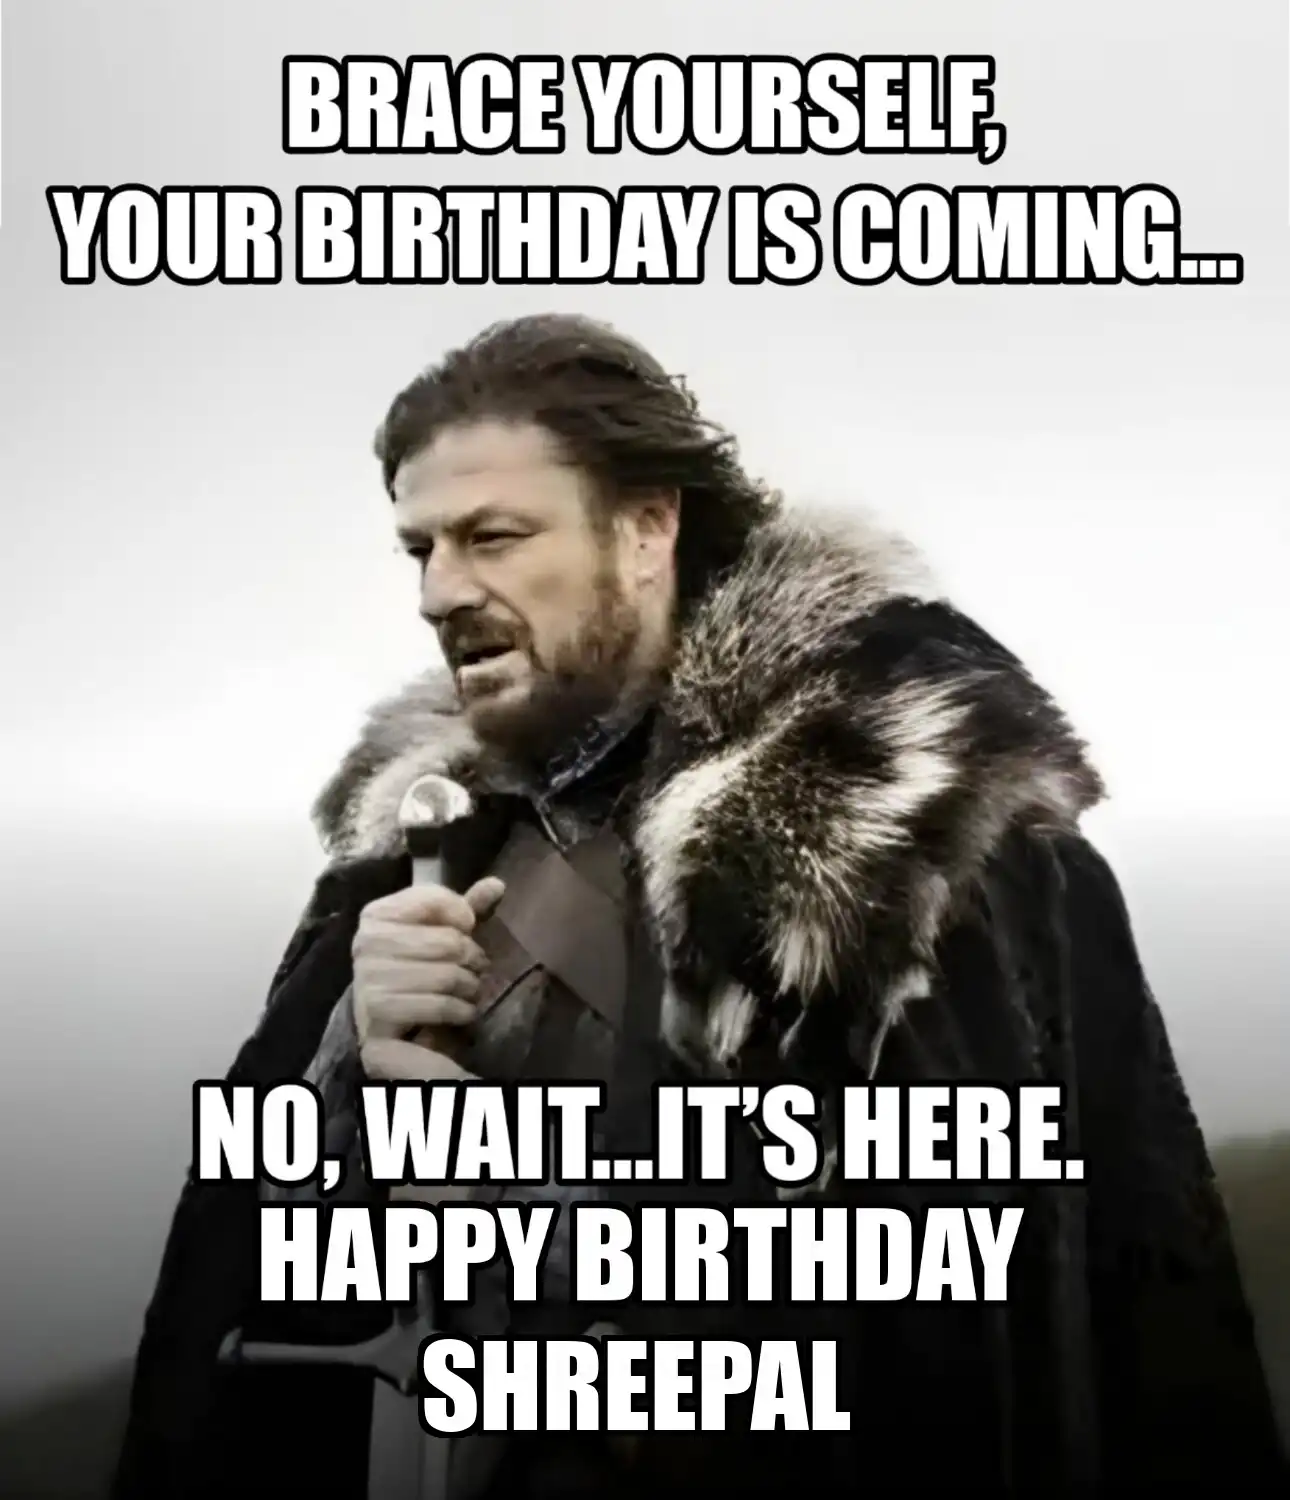 Happy Birthday Shreepal Brace Yourself Your Birthday Is Coming Meme